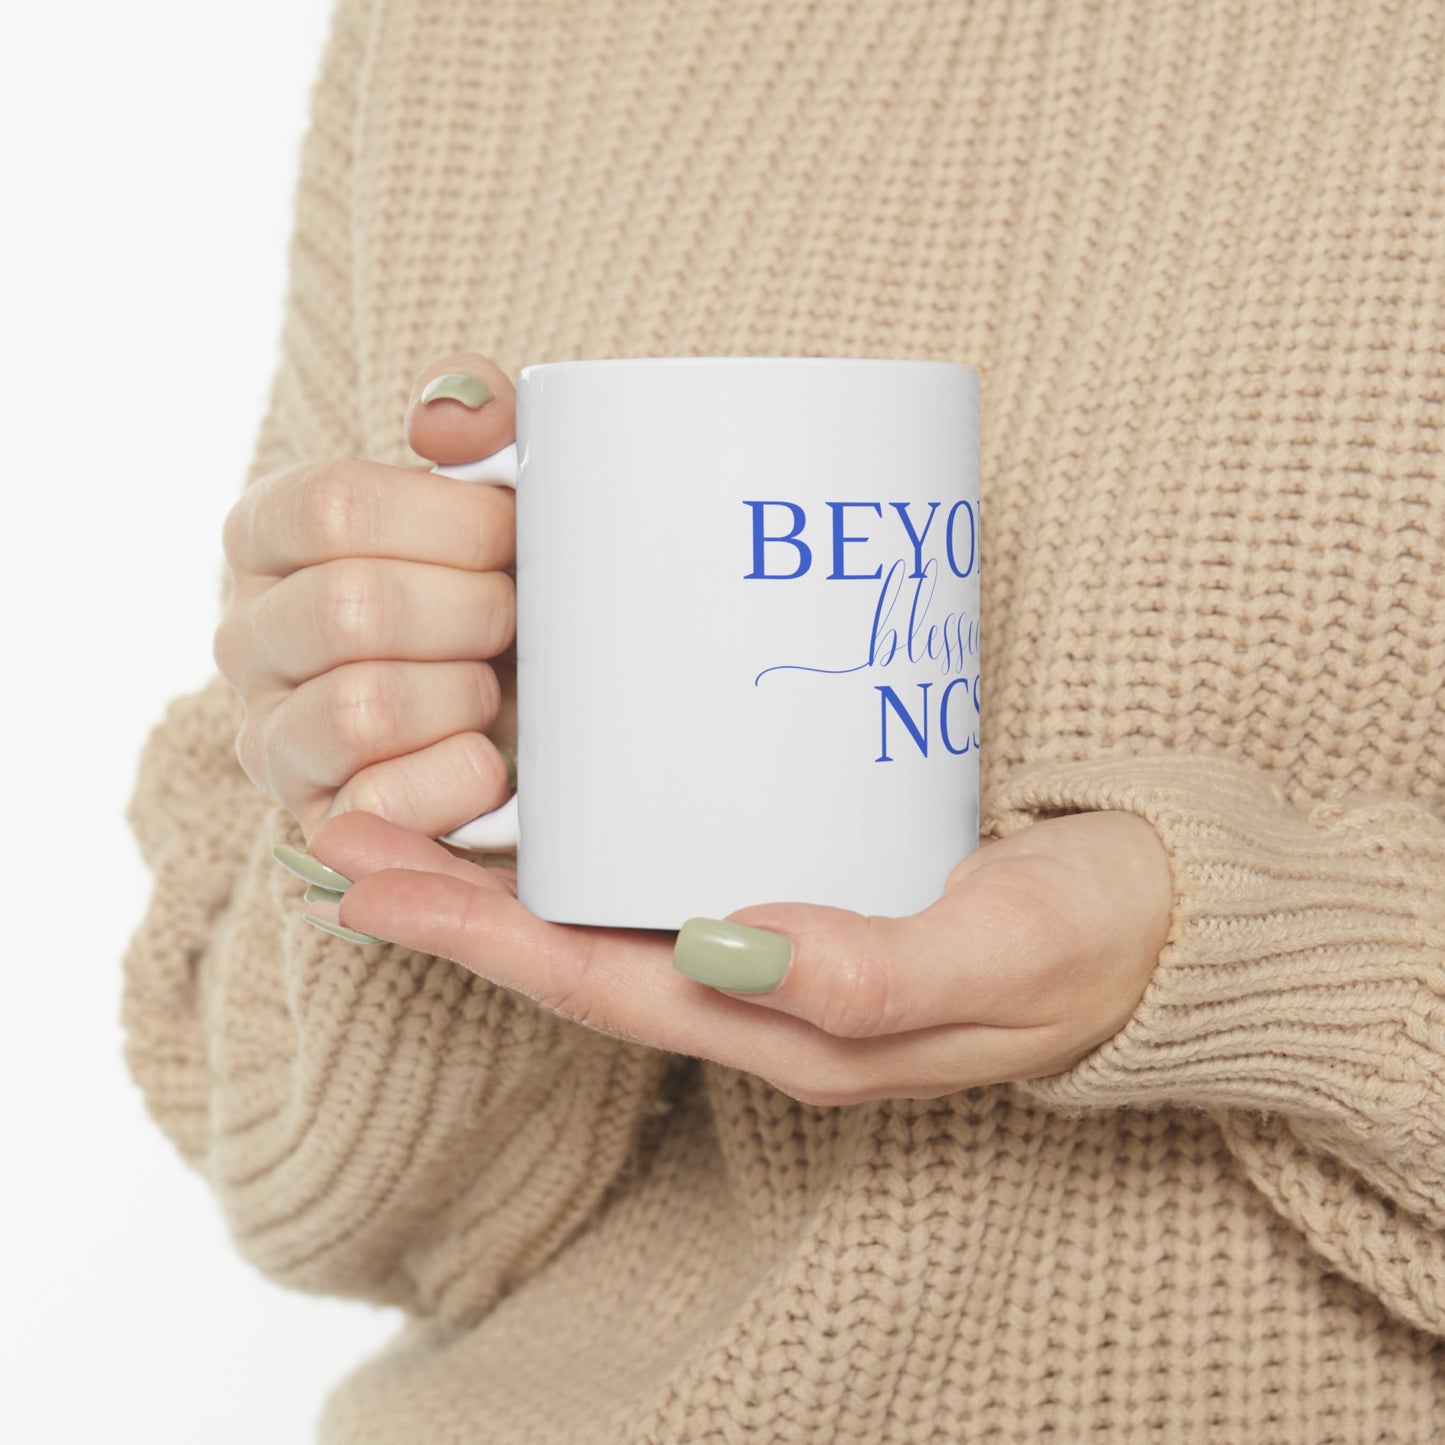 Beyond Blessed NCS - Plain Ceramic Mug 11oz - Royal Blue